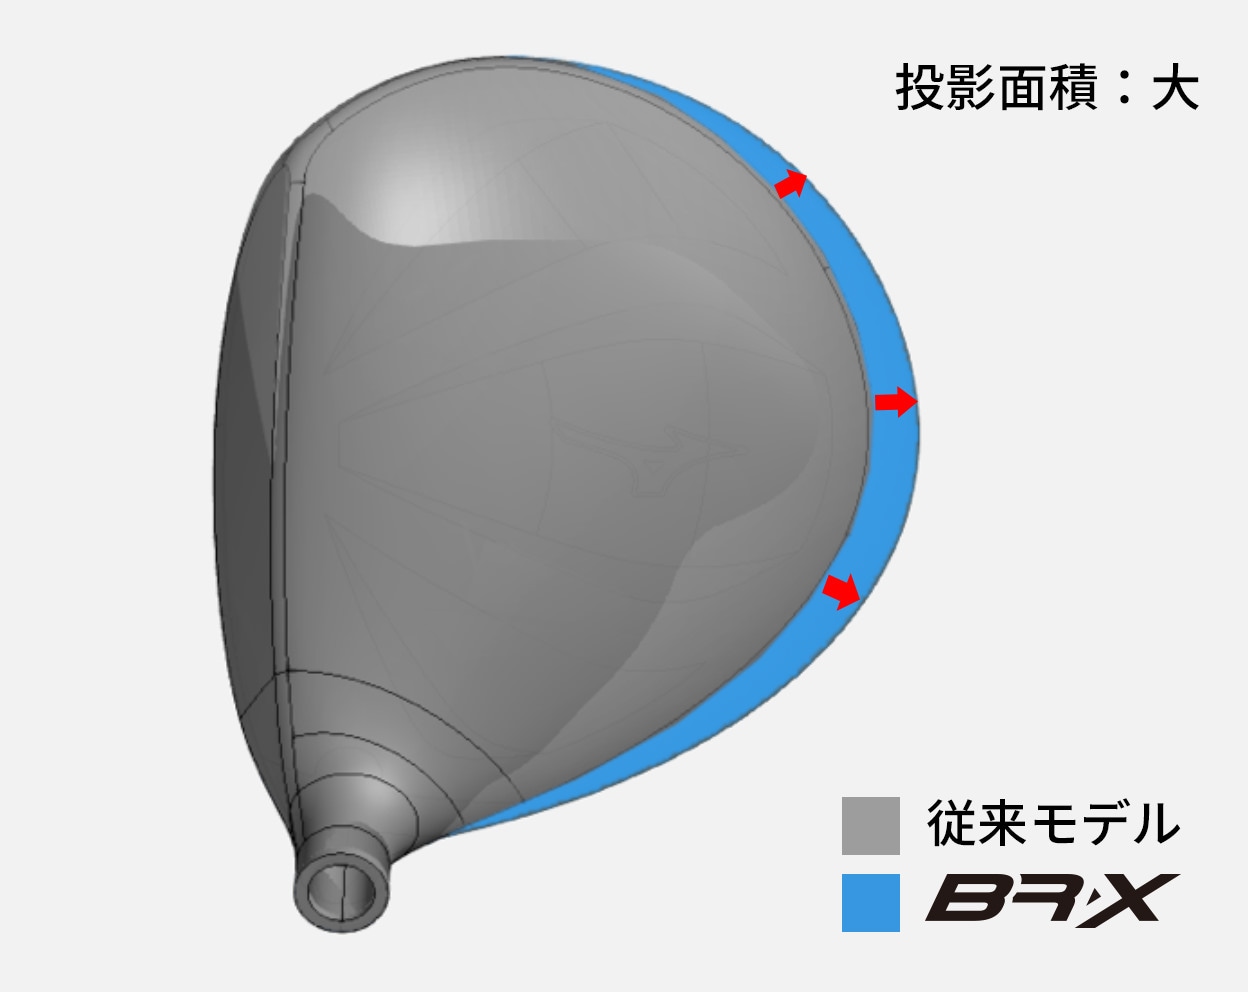 MIZUNO BR-X [メンズ] | ゴルフパートナーとミズノが共同開発